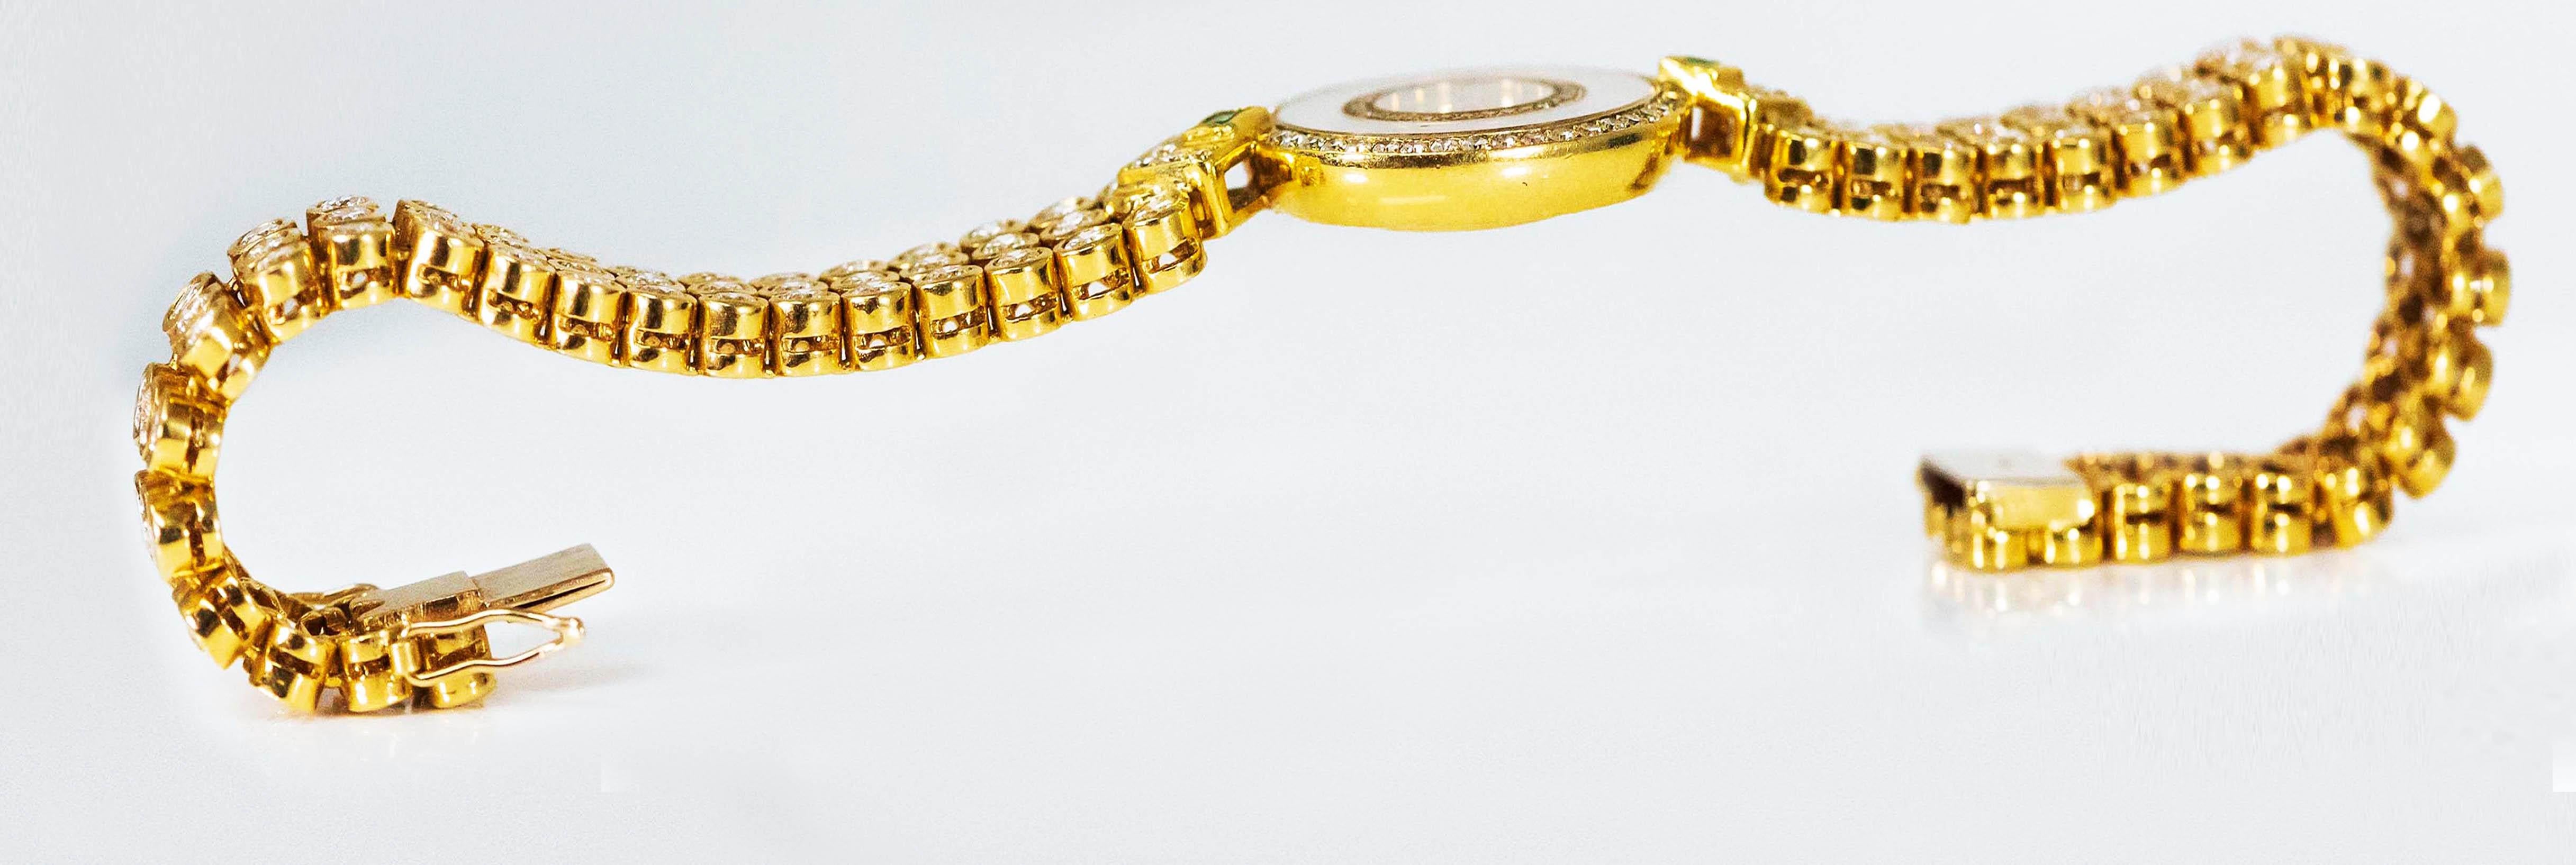 Contemporary 1980s-1990s Chopard Happy Diamond Emerald Approx 14 Carat Bracelet Watch